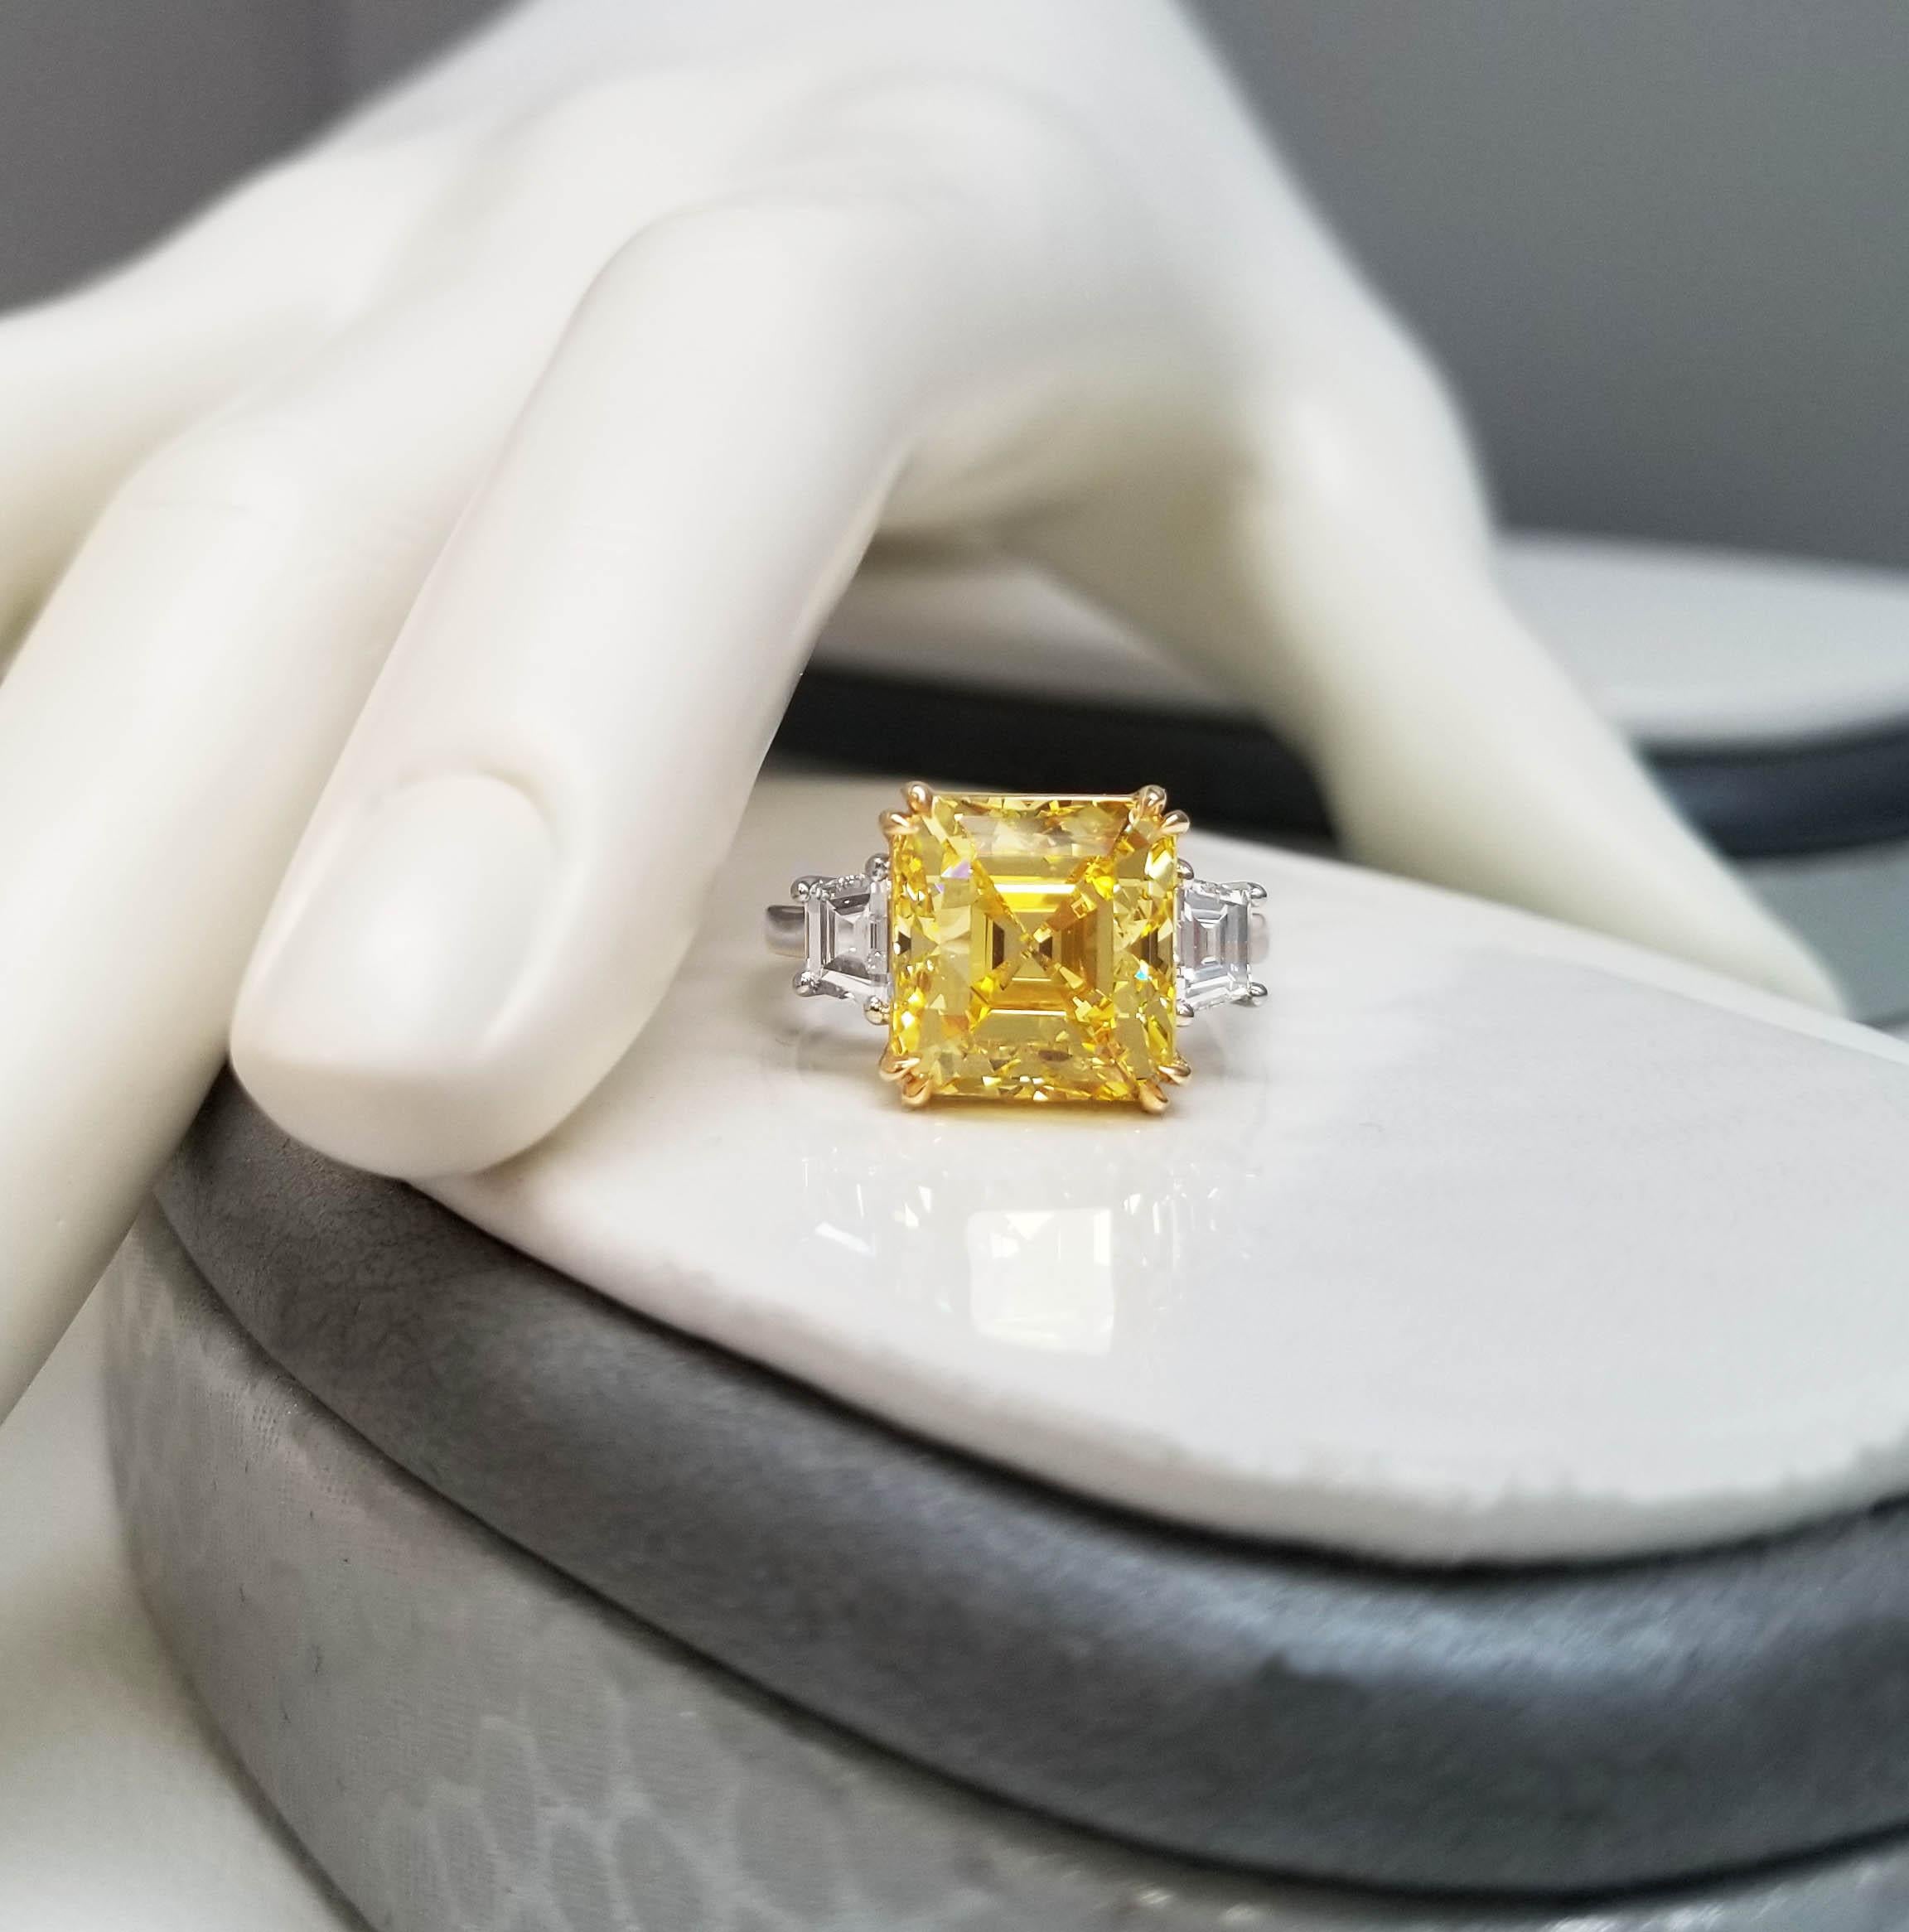 Women's Scarselli 6 Carat Fancy Vivid Yellow Emerald Cut Diamond Ring in Platinum